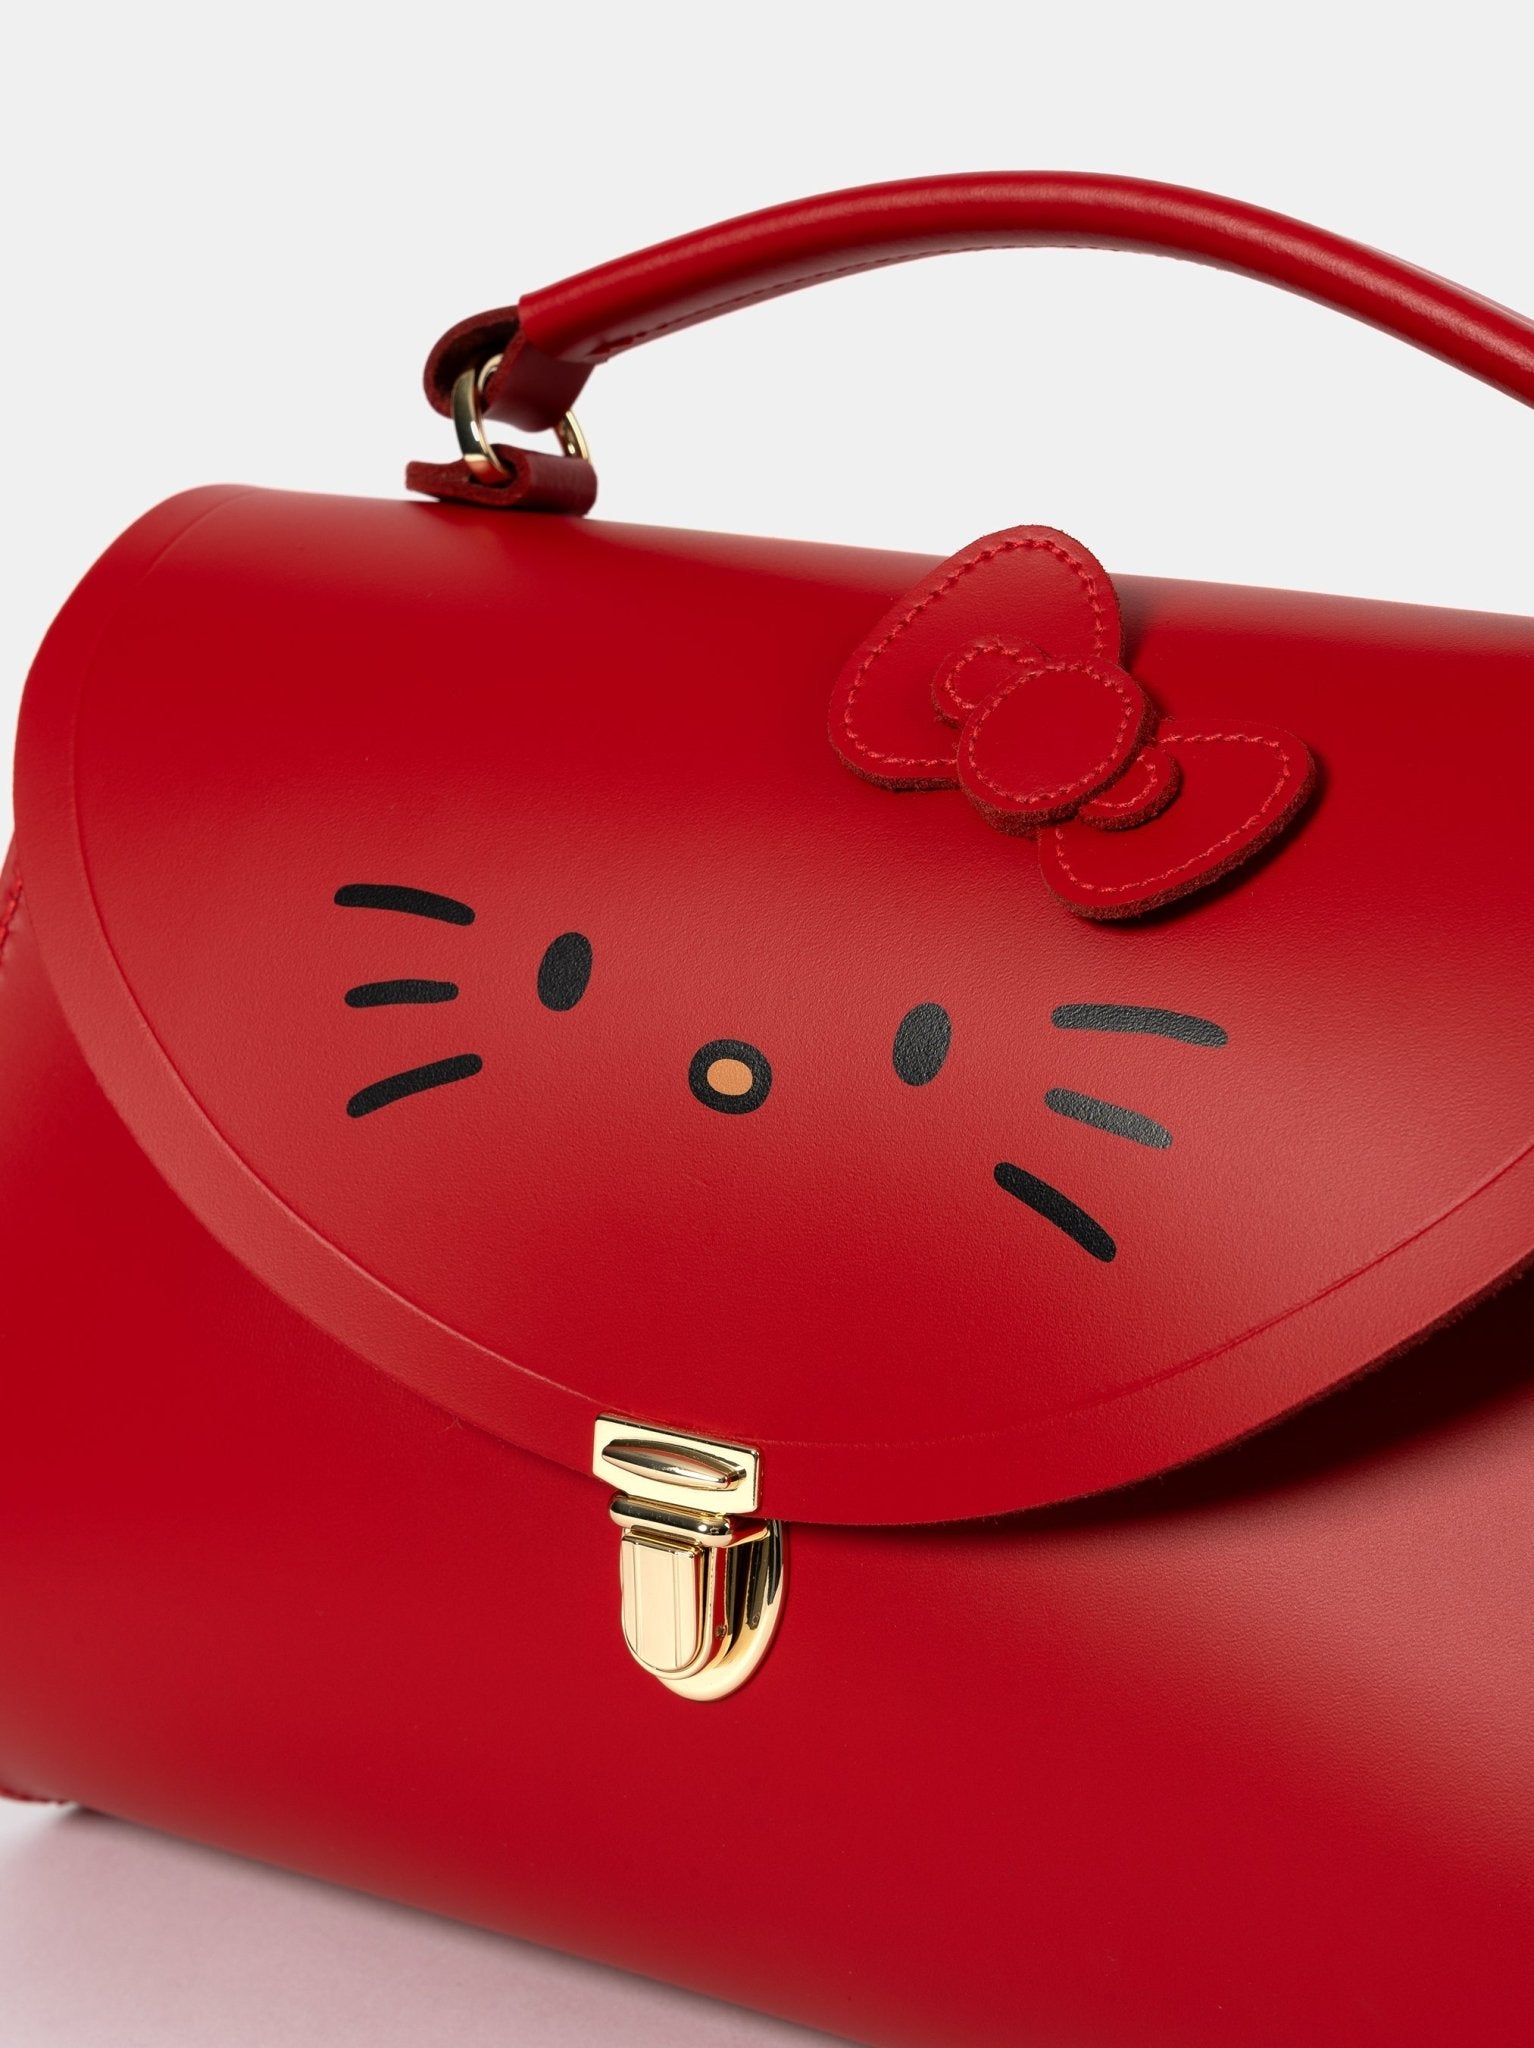 The Hello Kitty Poppy Bag - Red - Cambridge Satchel